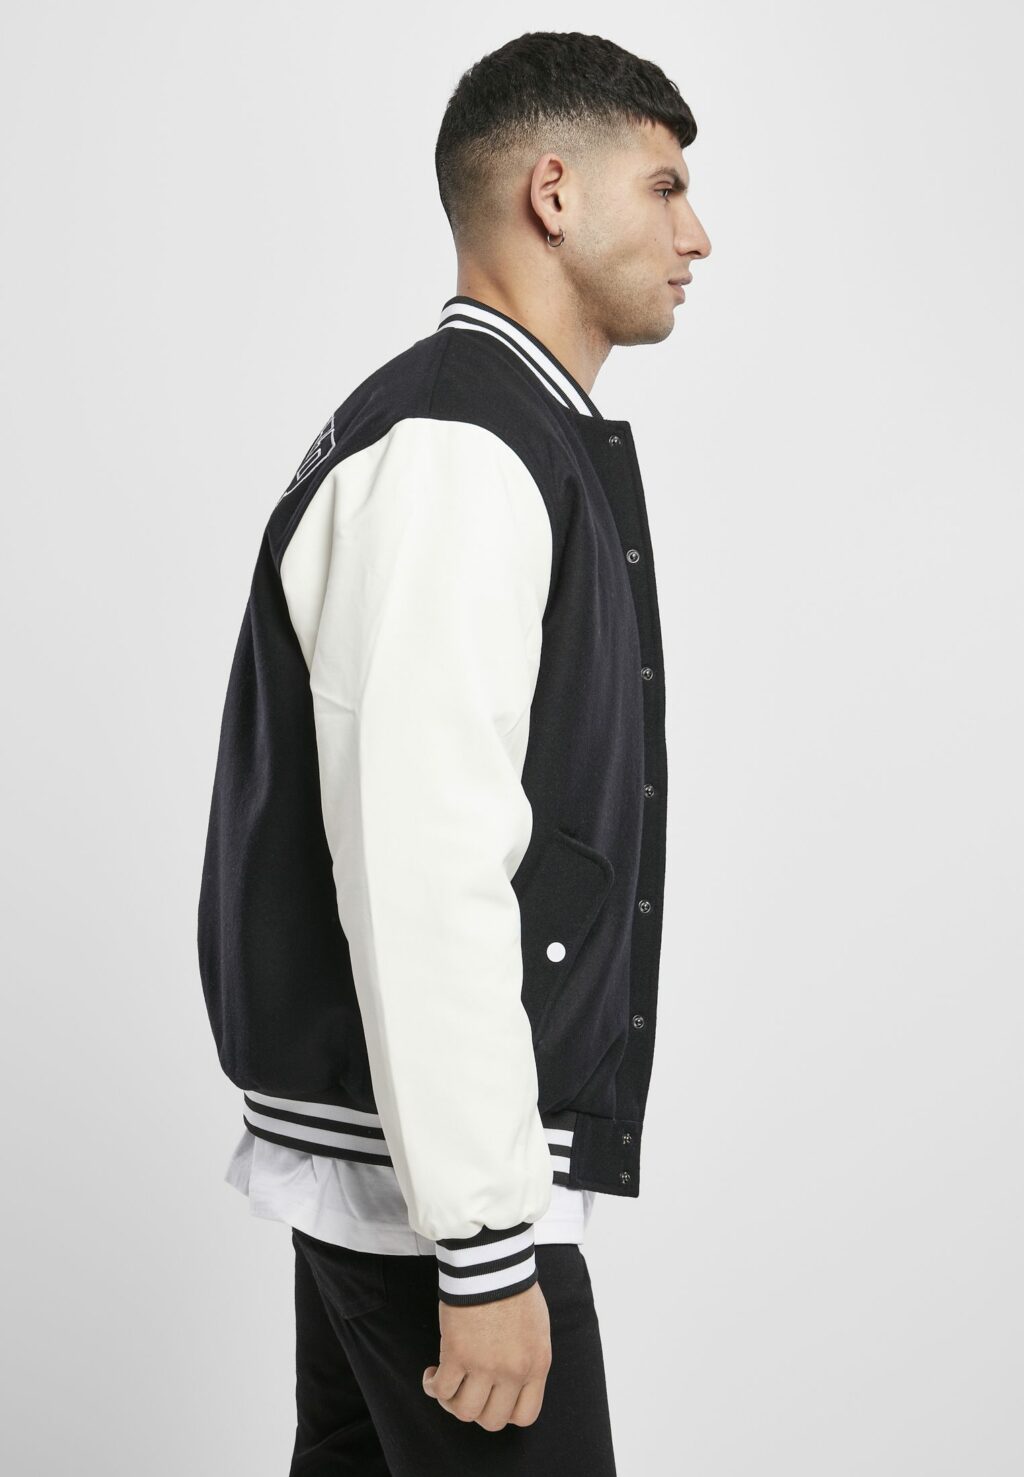 Starter College Jacket black/white ST054